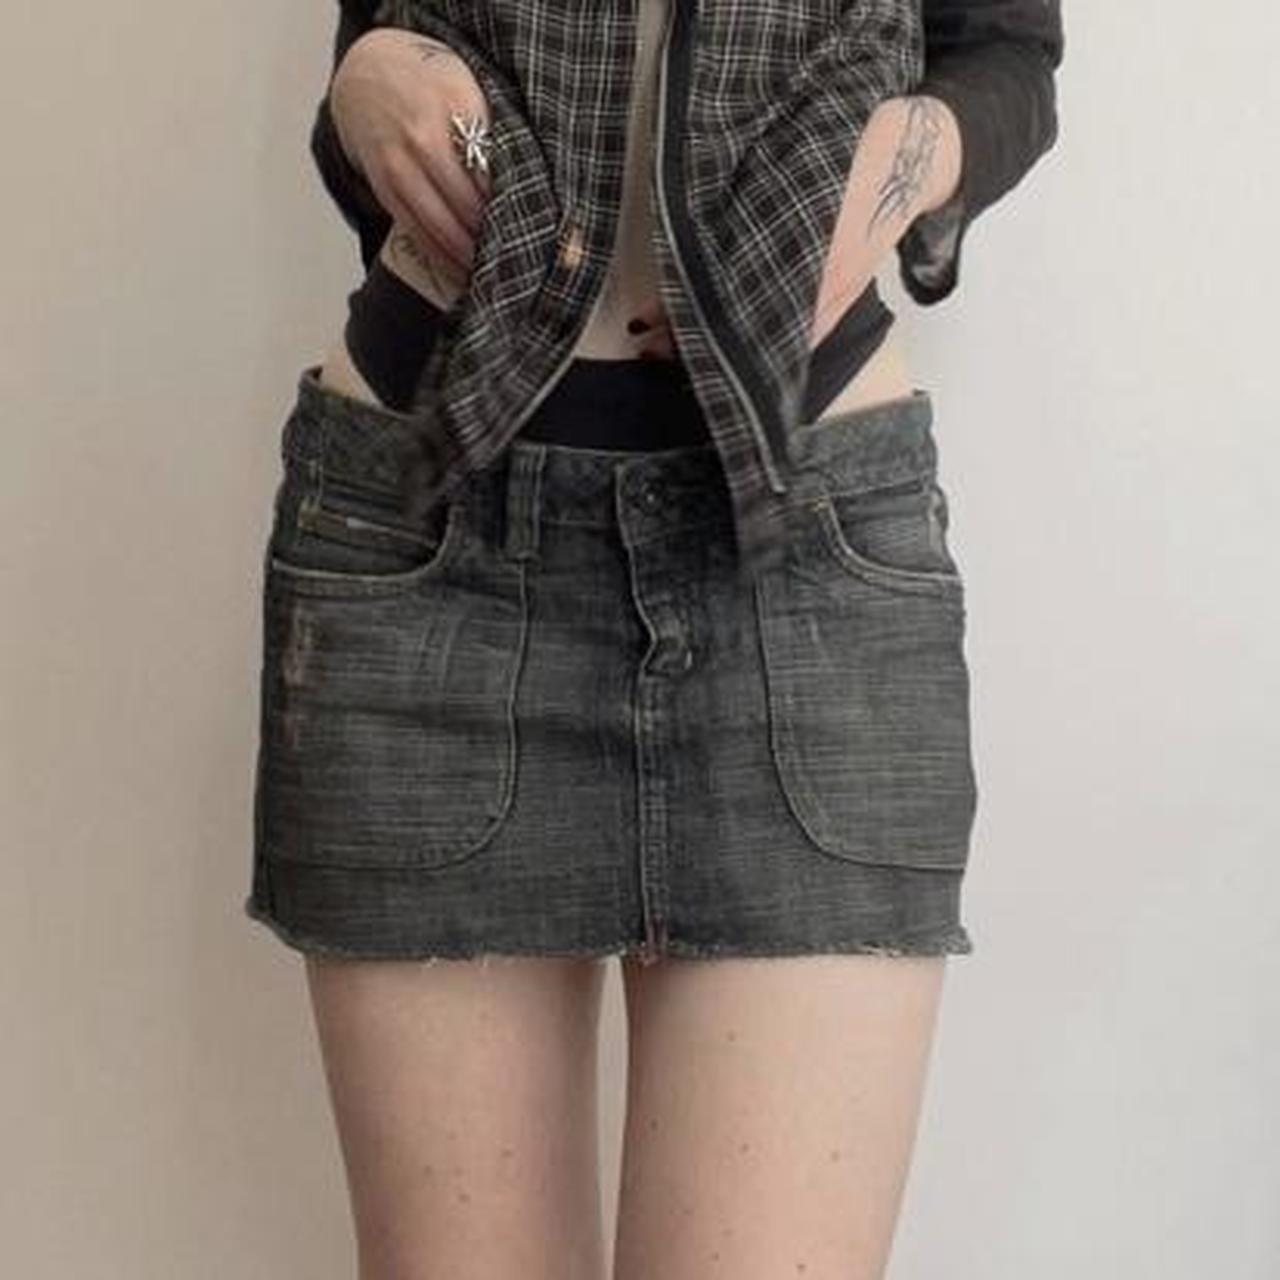 Yk2 Micro mini denim skirt Originally topshop #yk2... - Depop